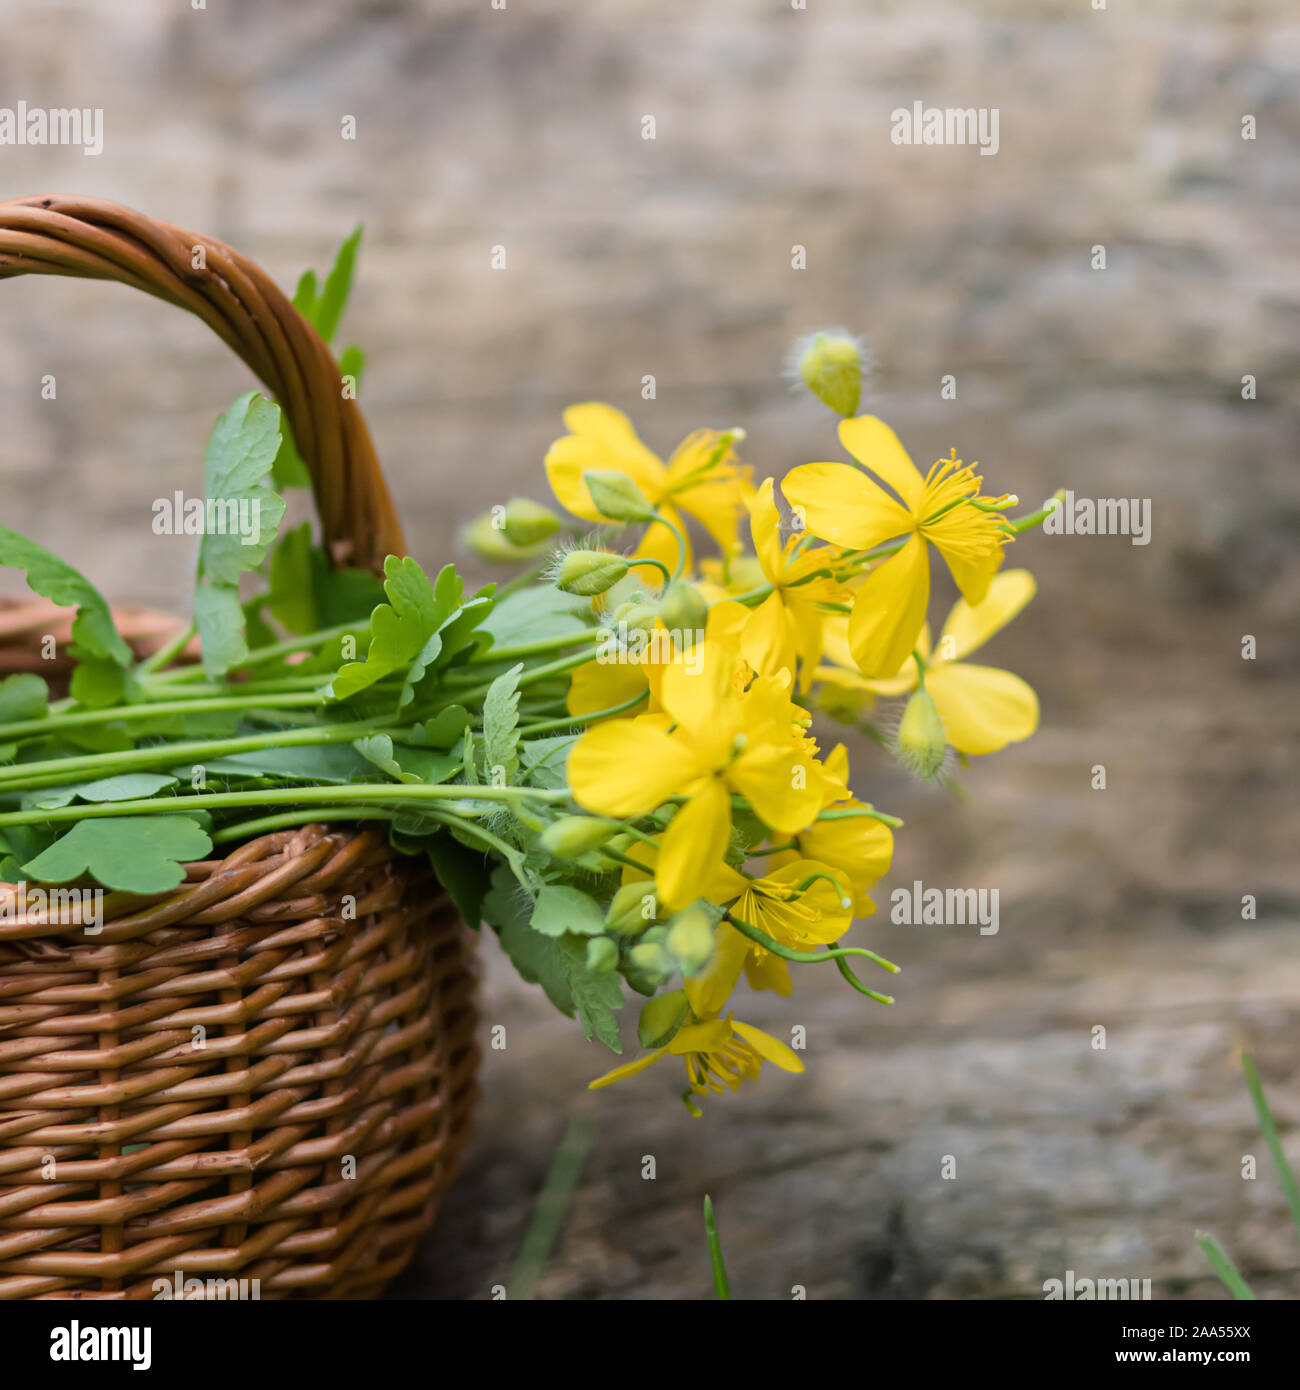 Chelidonium majus, greater celandine, nipplewort, swallowwort or tetterwort yellow flowers in wicker basket from vine. Collection of medicinal plants Stock Photo